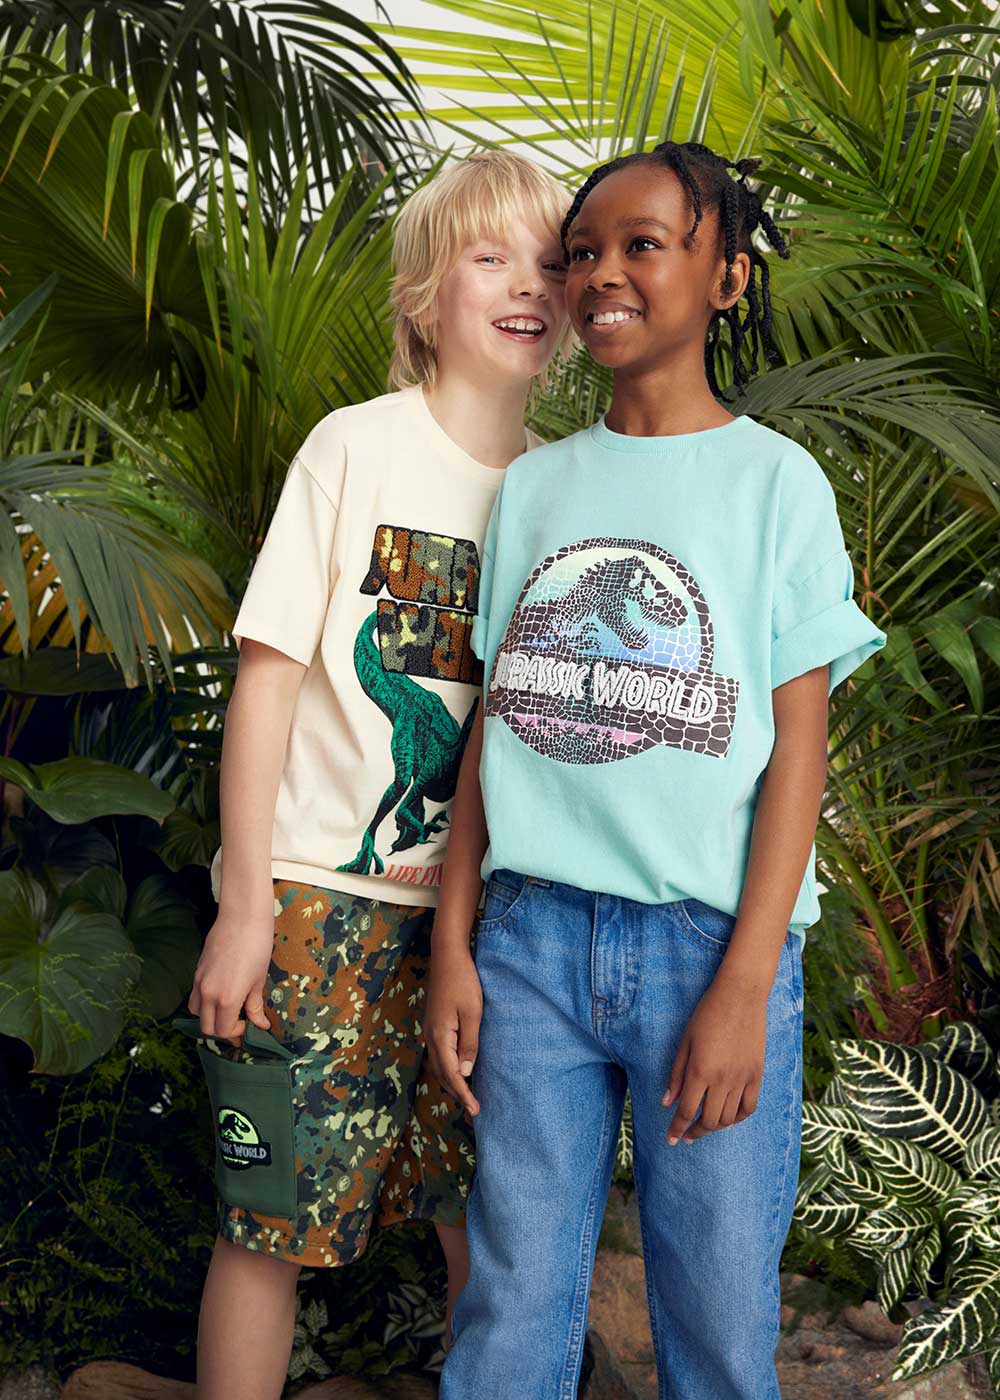 Two boys stood together wearing Jurassic World clothing